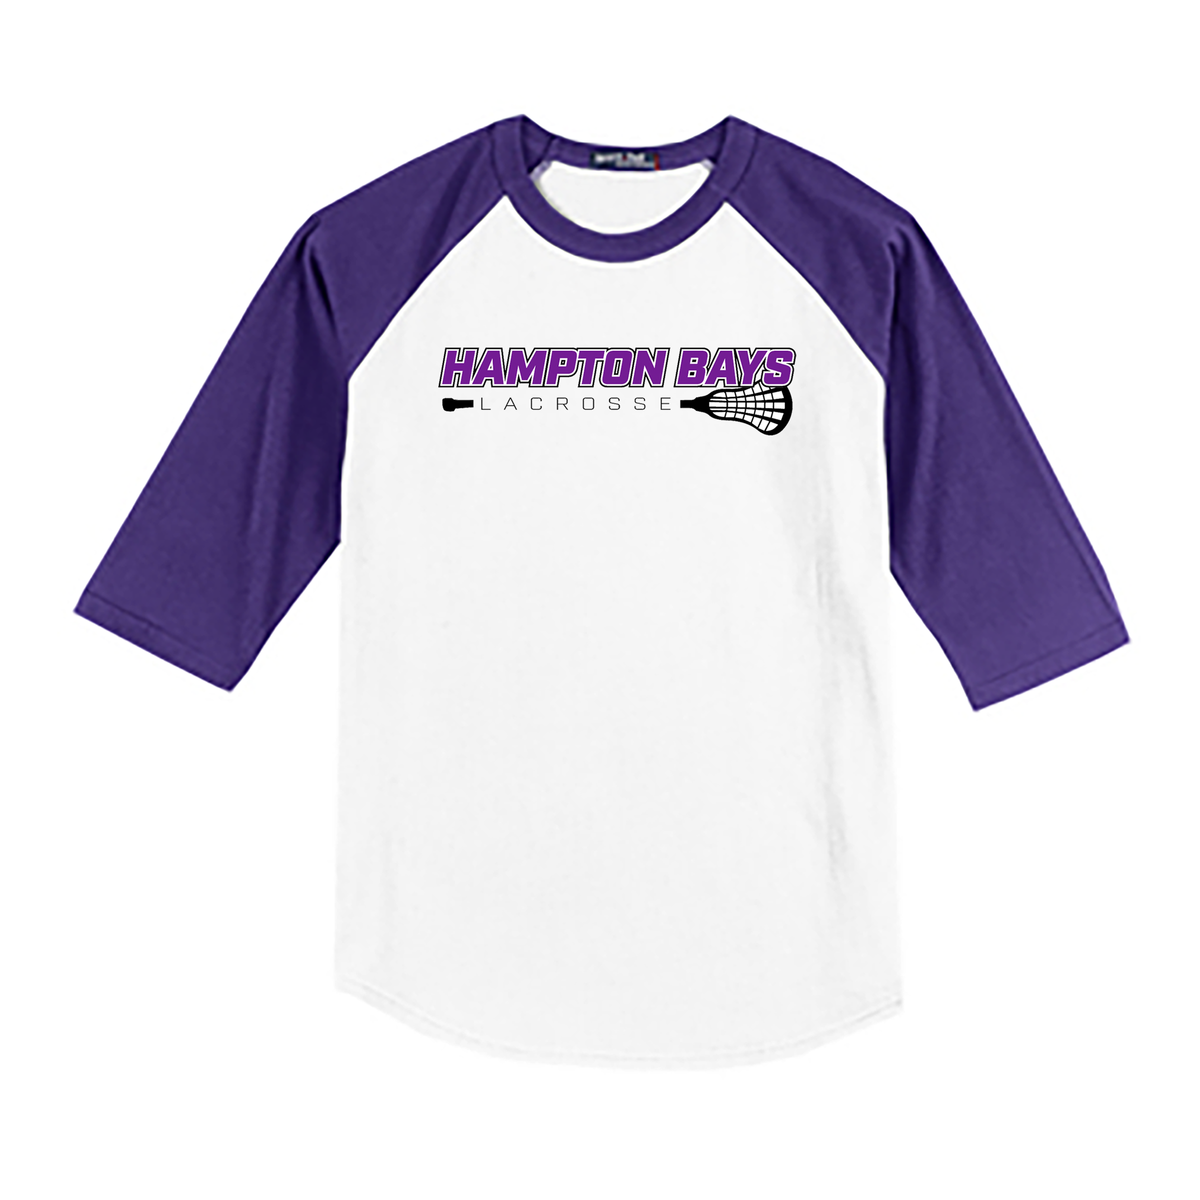 Hampton Bays Lacrosse 3/4 Sleeve Baseball Shirt